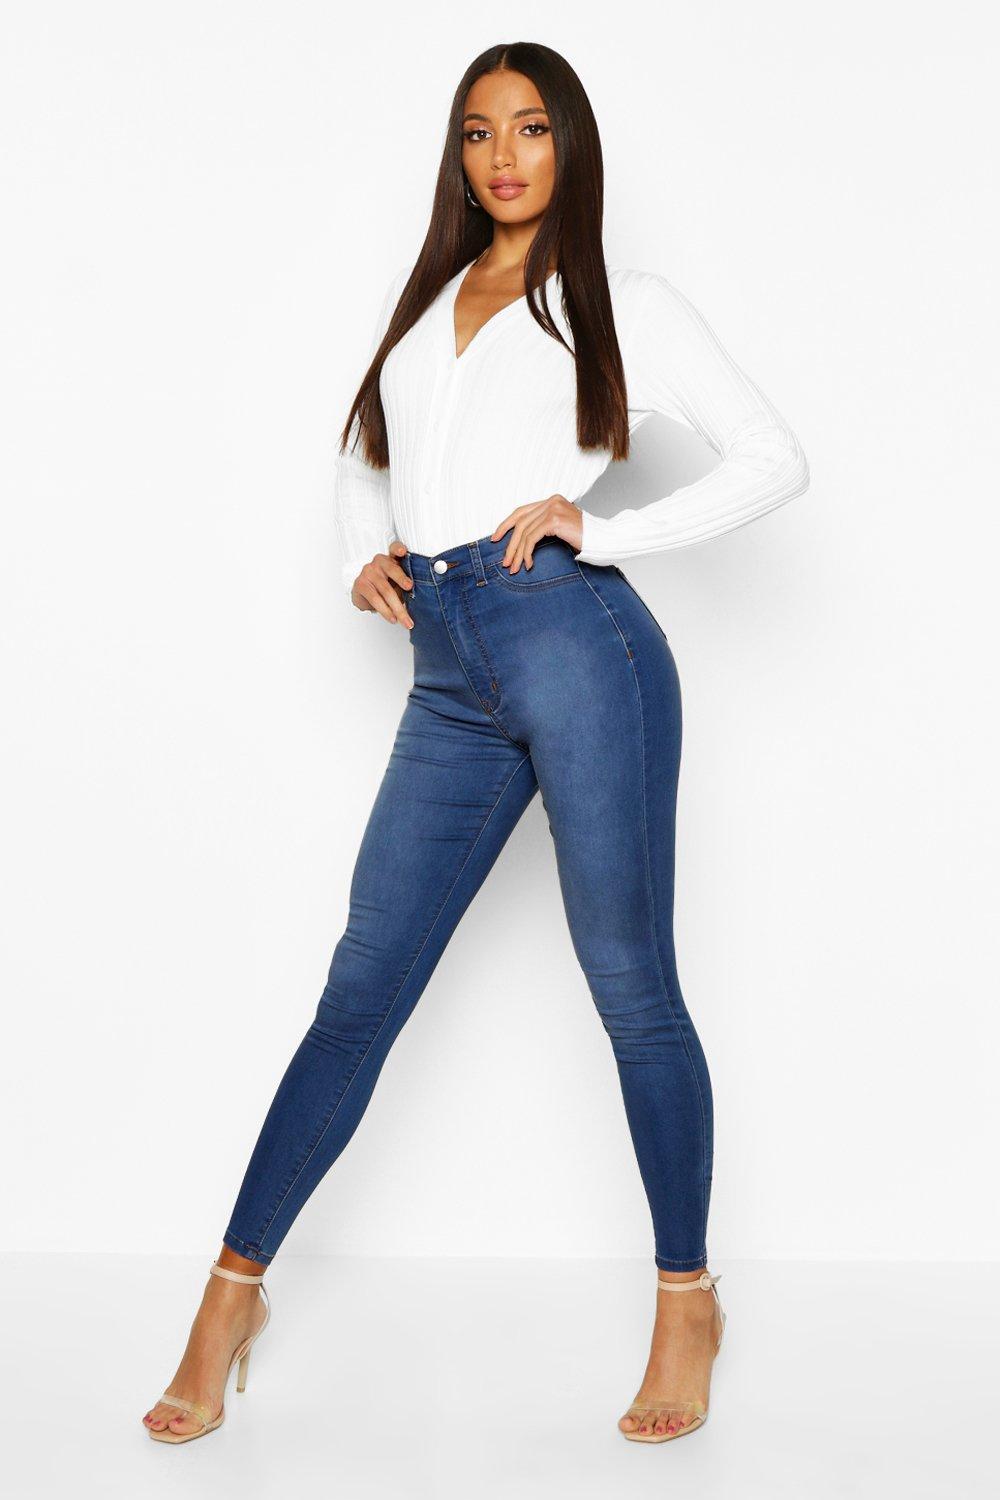 https://media.boohoo.com/i/boohoo/fzz82096_mid%20blue_xl_3/female-mid%20blue-butt-shaper-high-waisted-stretch-skinny-jeans